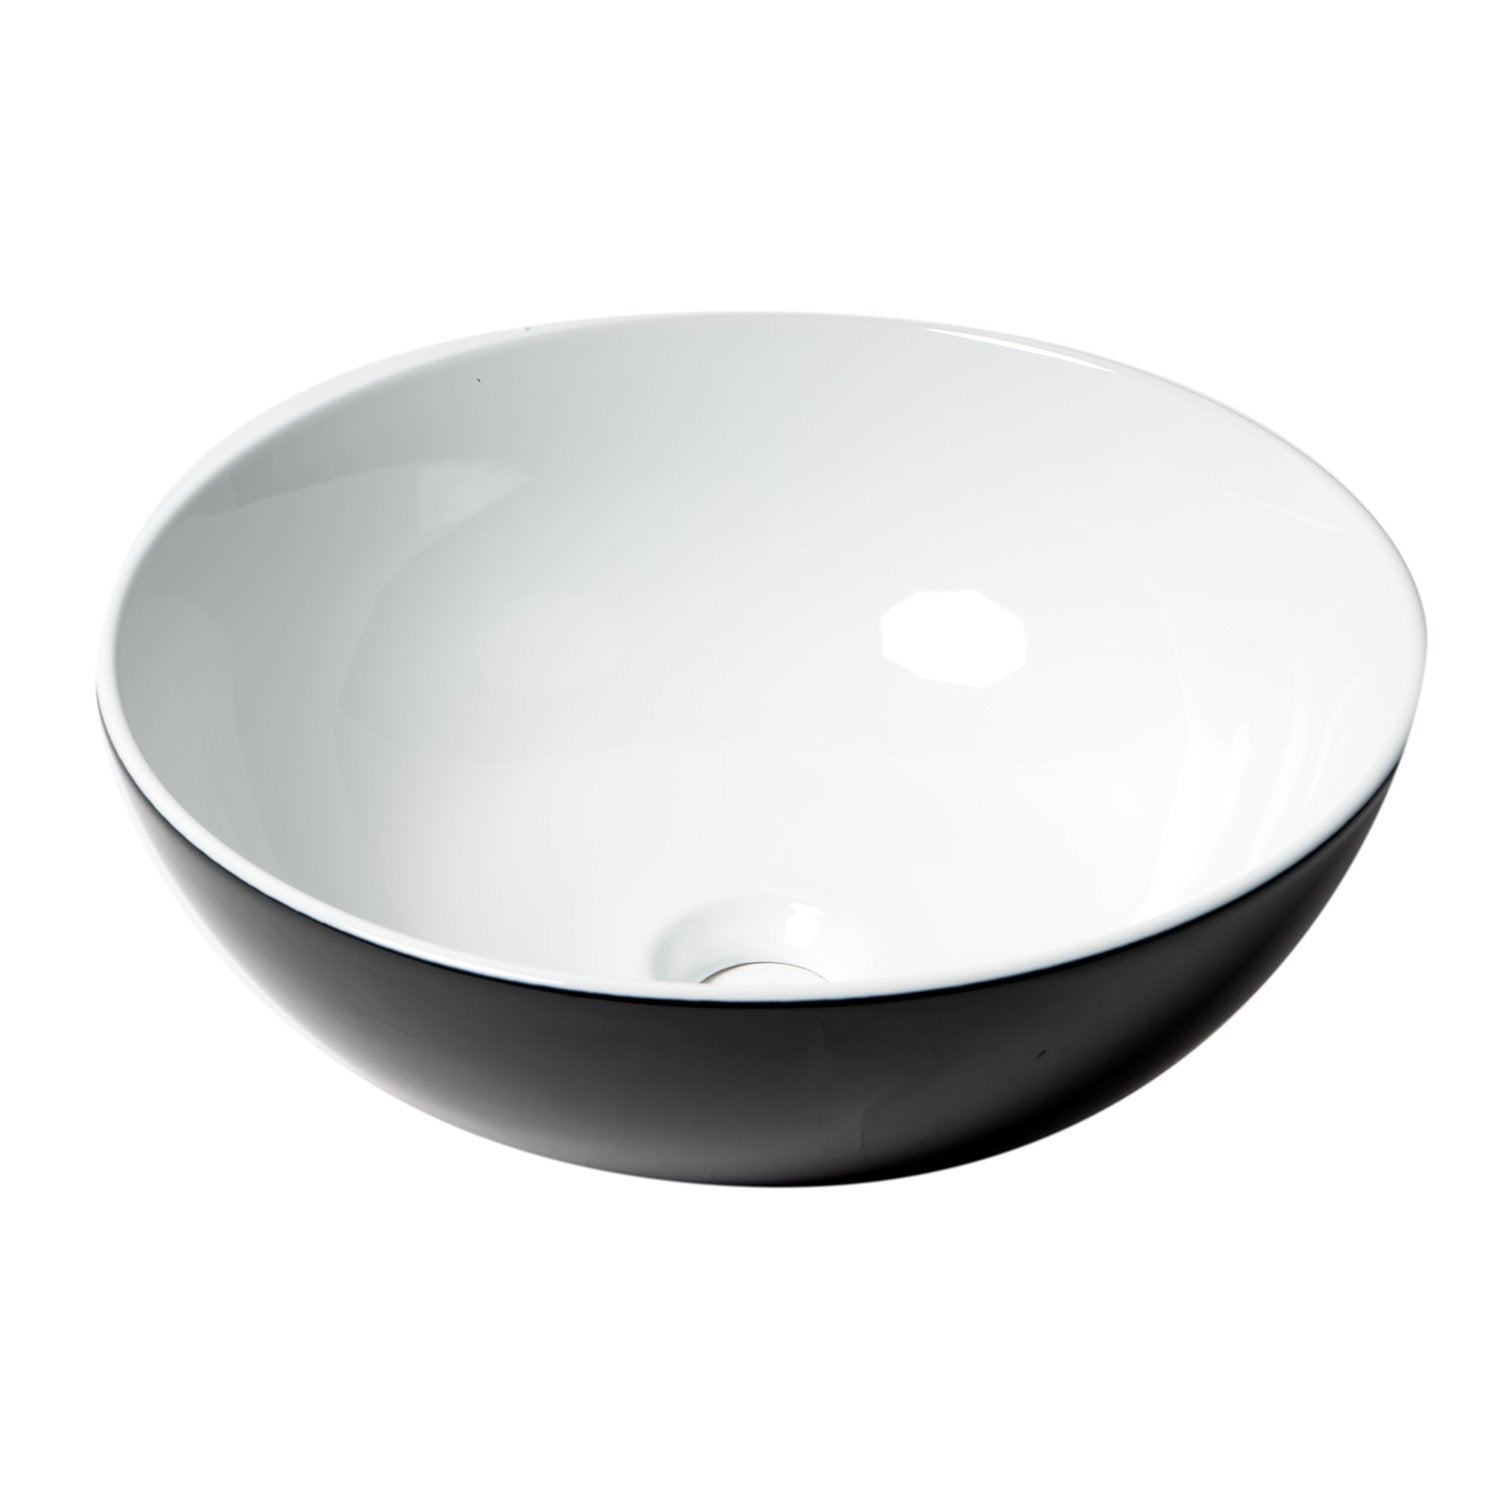 ALFI ABC906 Black & White 15" Round Vessel Above Mount Ceramic Sink